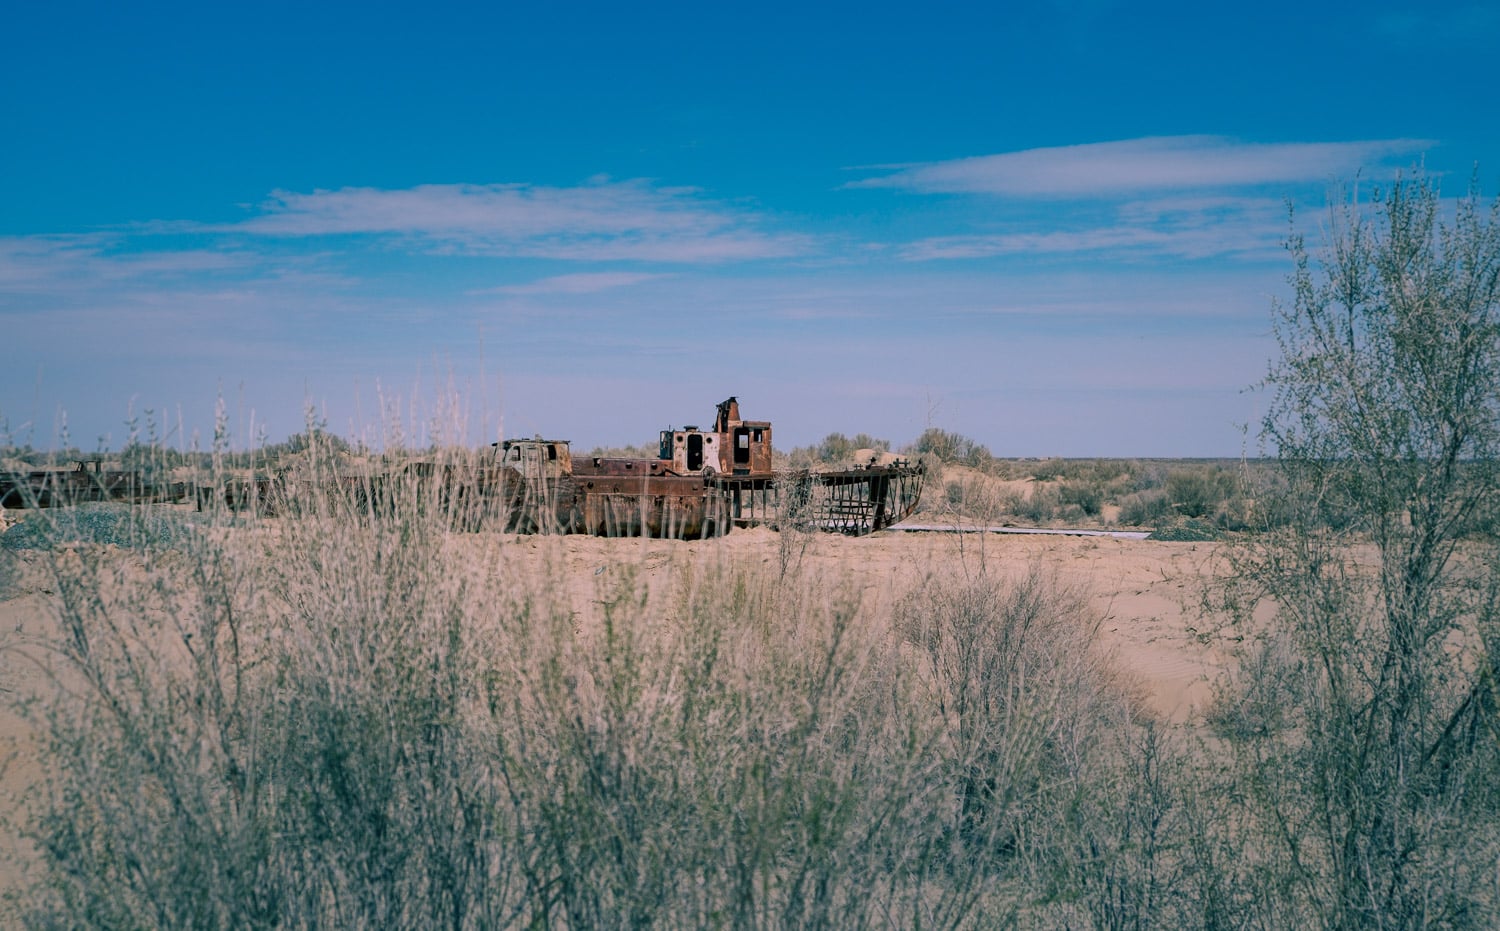 Båtar i Muynak vid Aralsjön